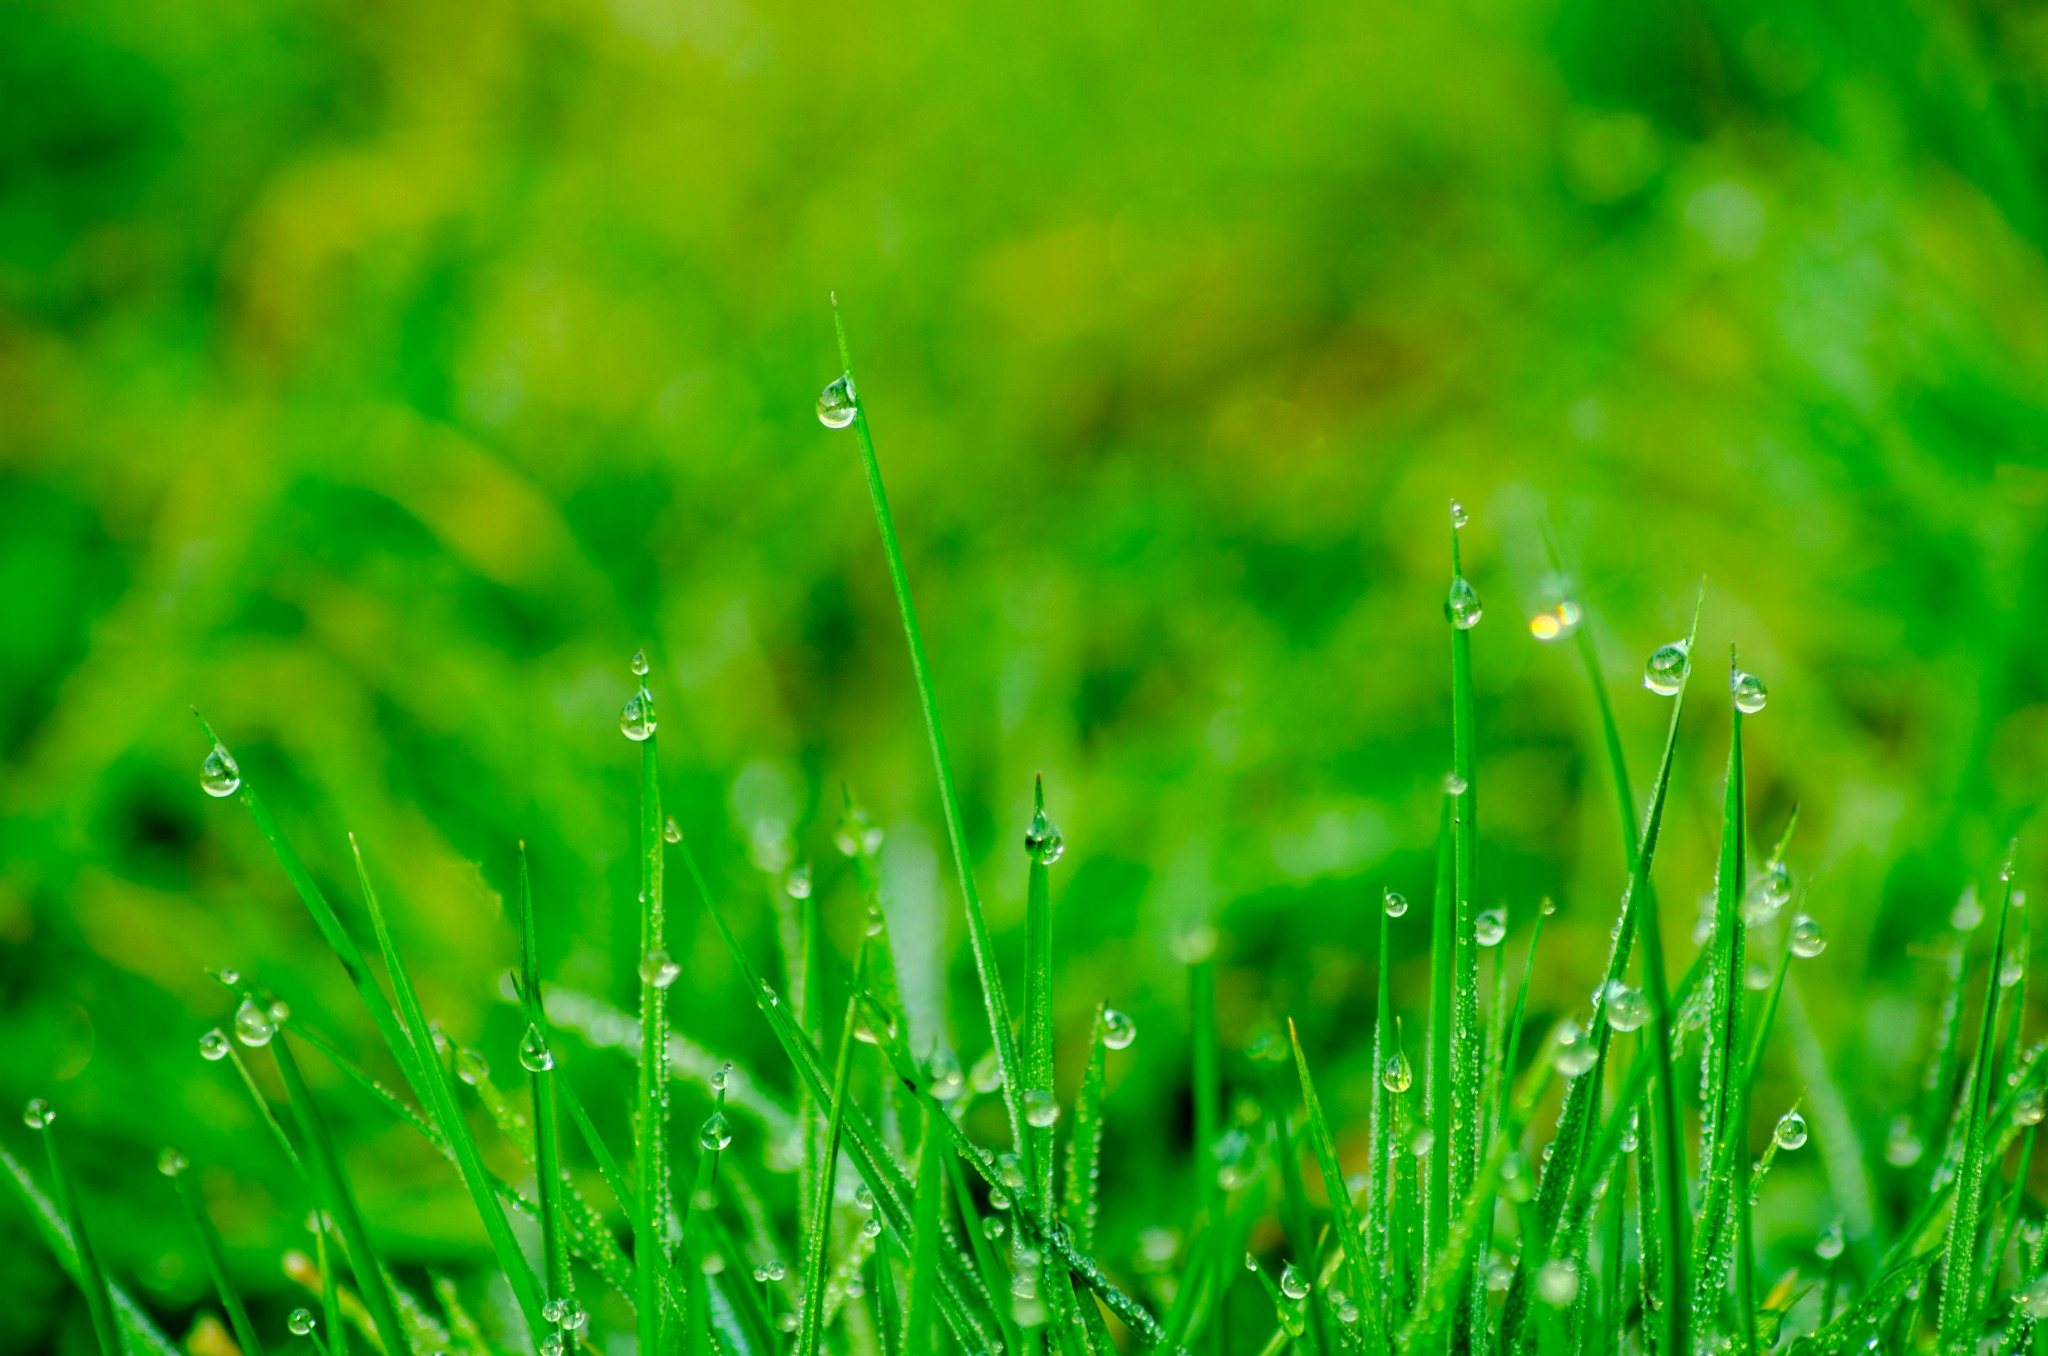 Spring fresh grass dew drops